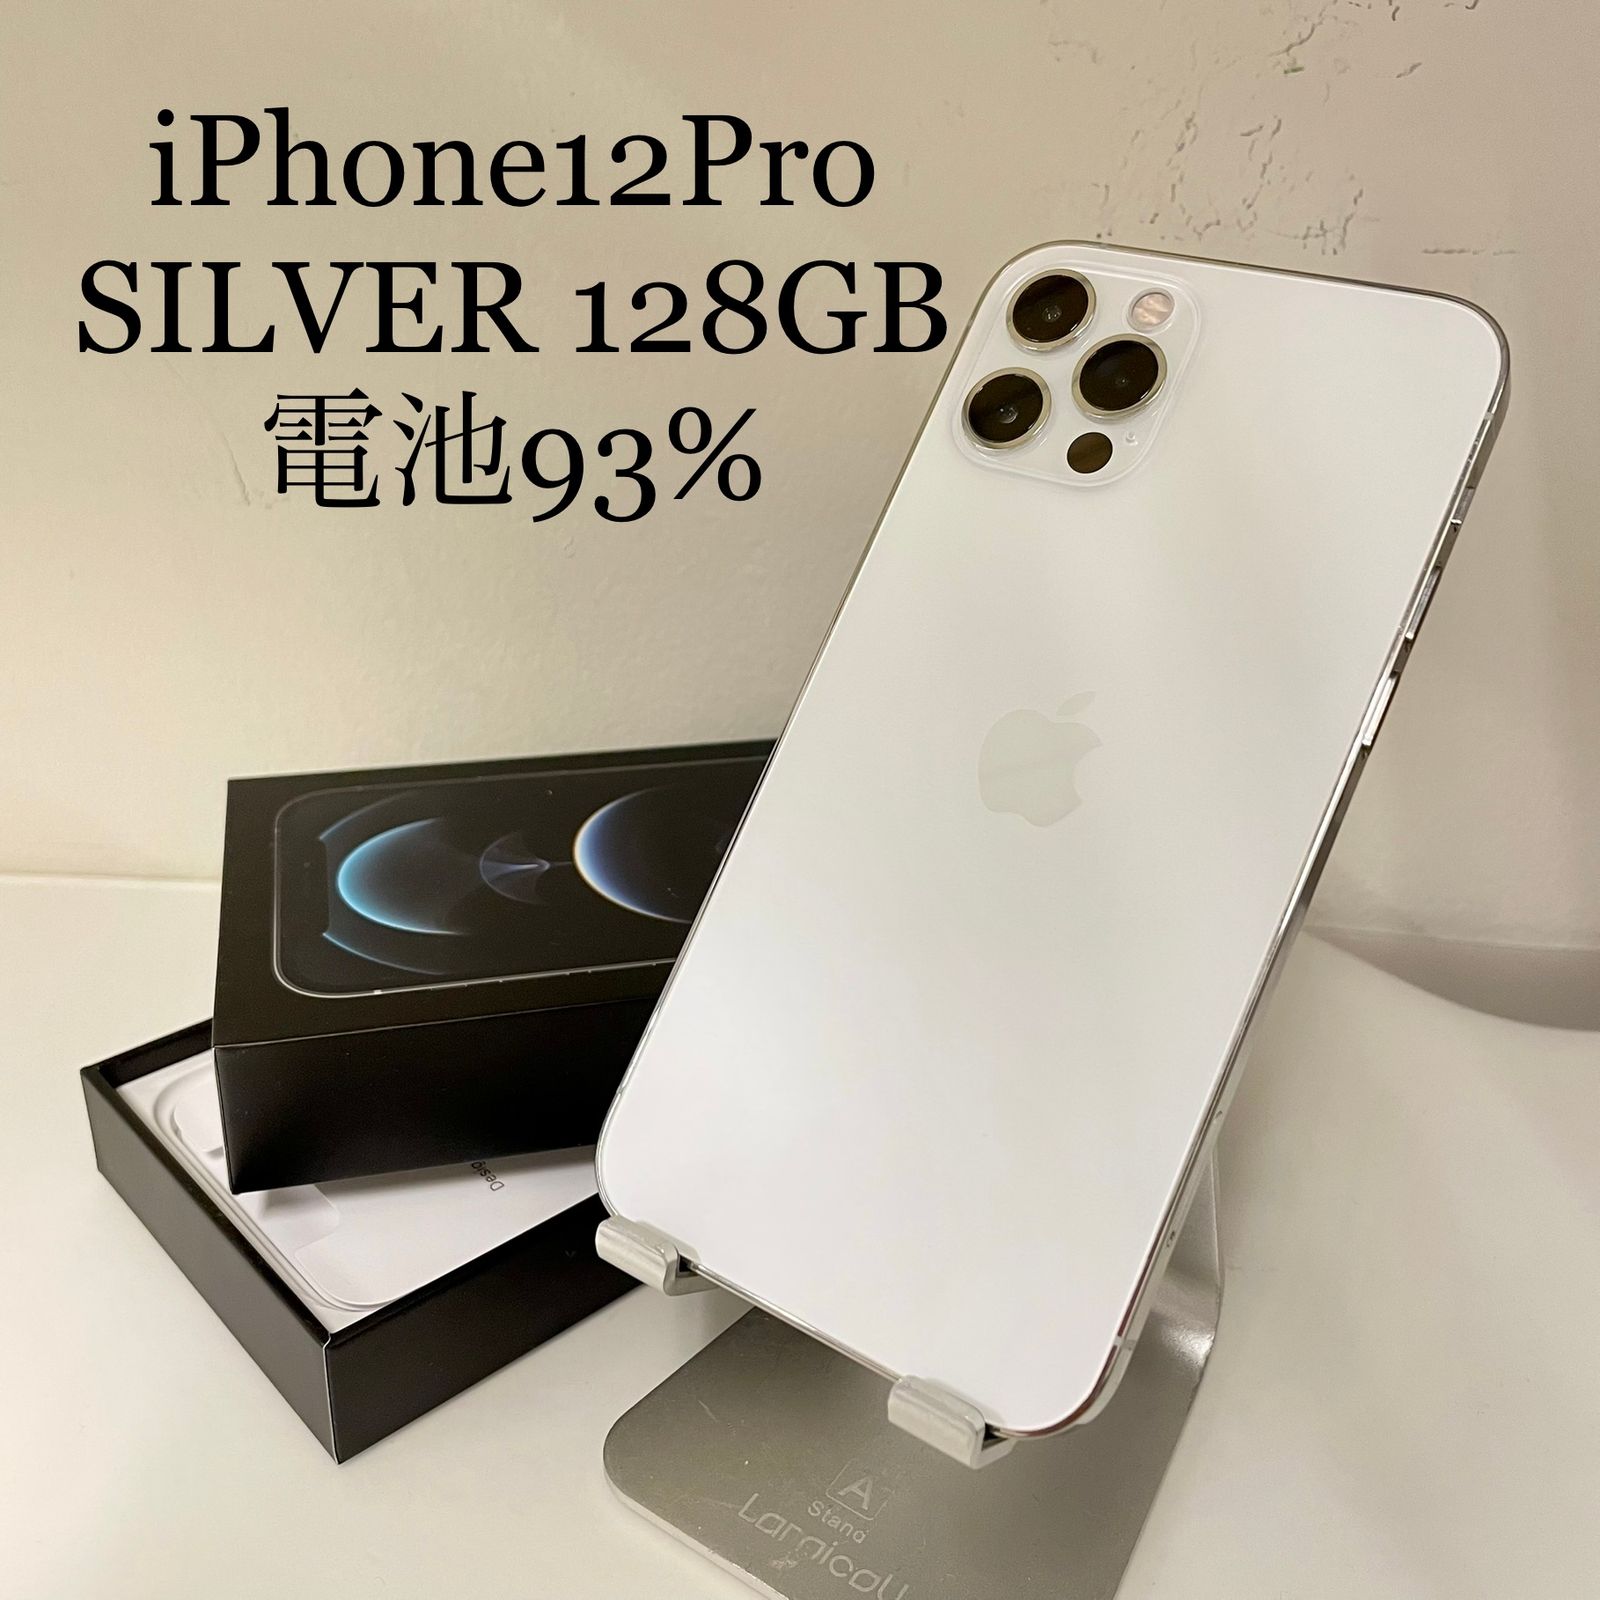 iPhone12 Pro シルバー 128GB 電池残量93% - ネコモバイル